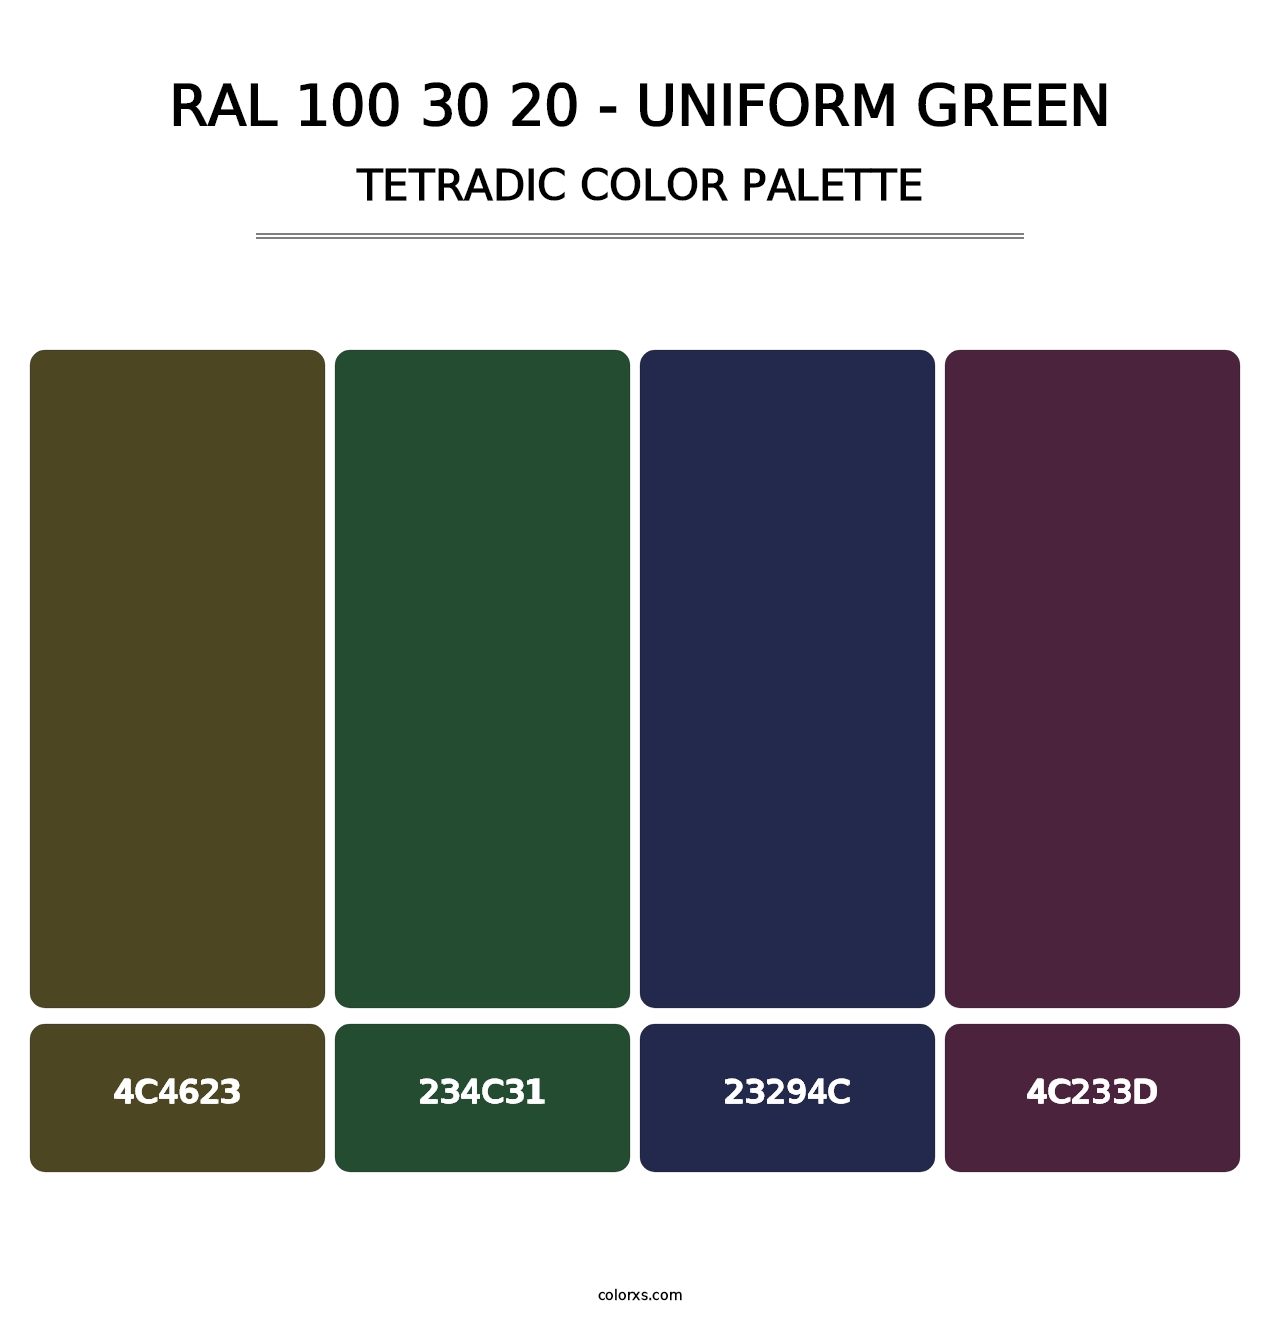 RAL 100 30 20 - Uniform Green - Tetradic Color Palette